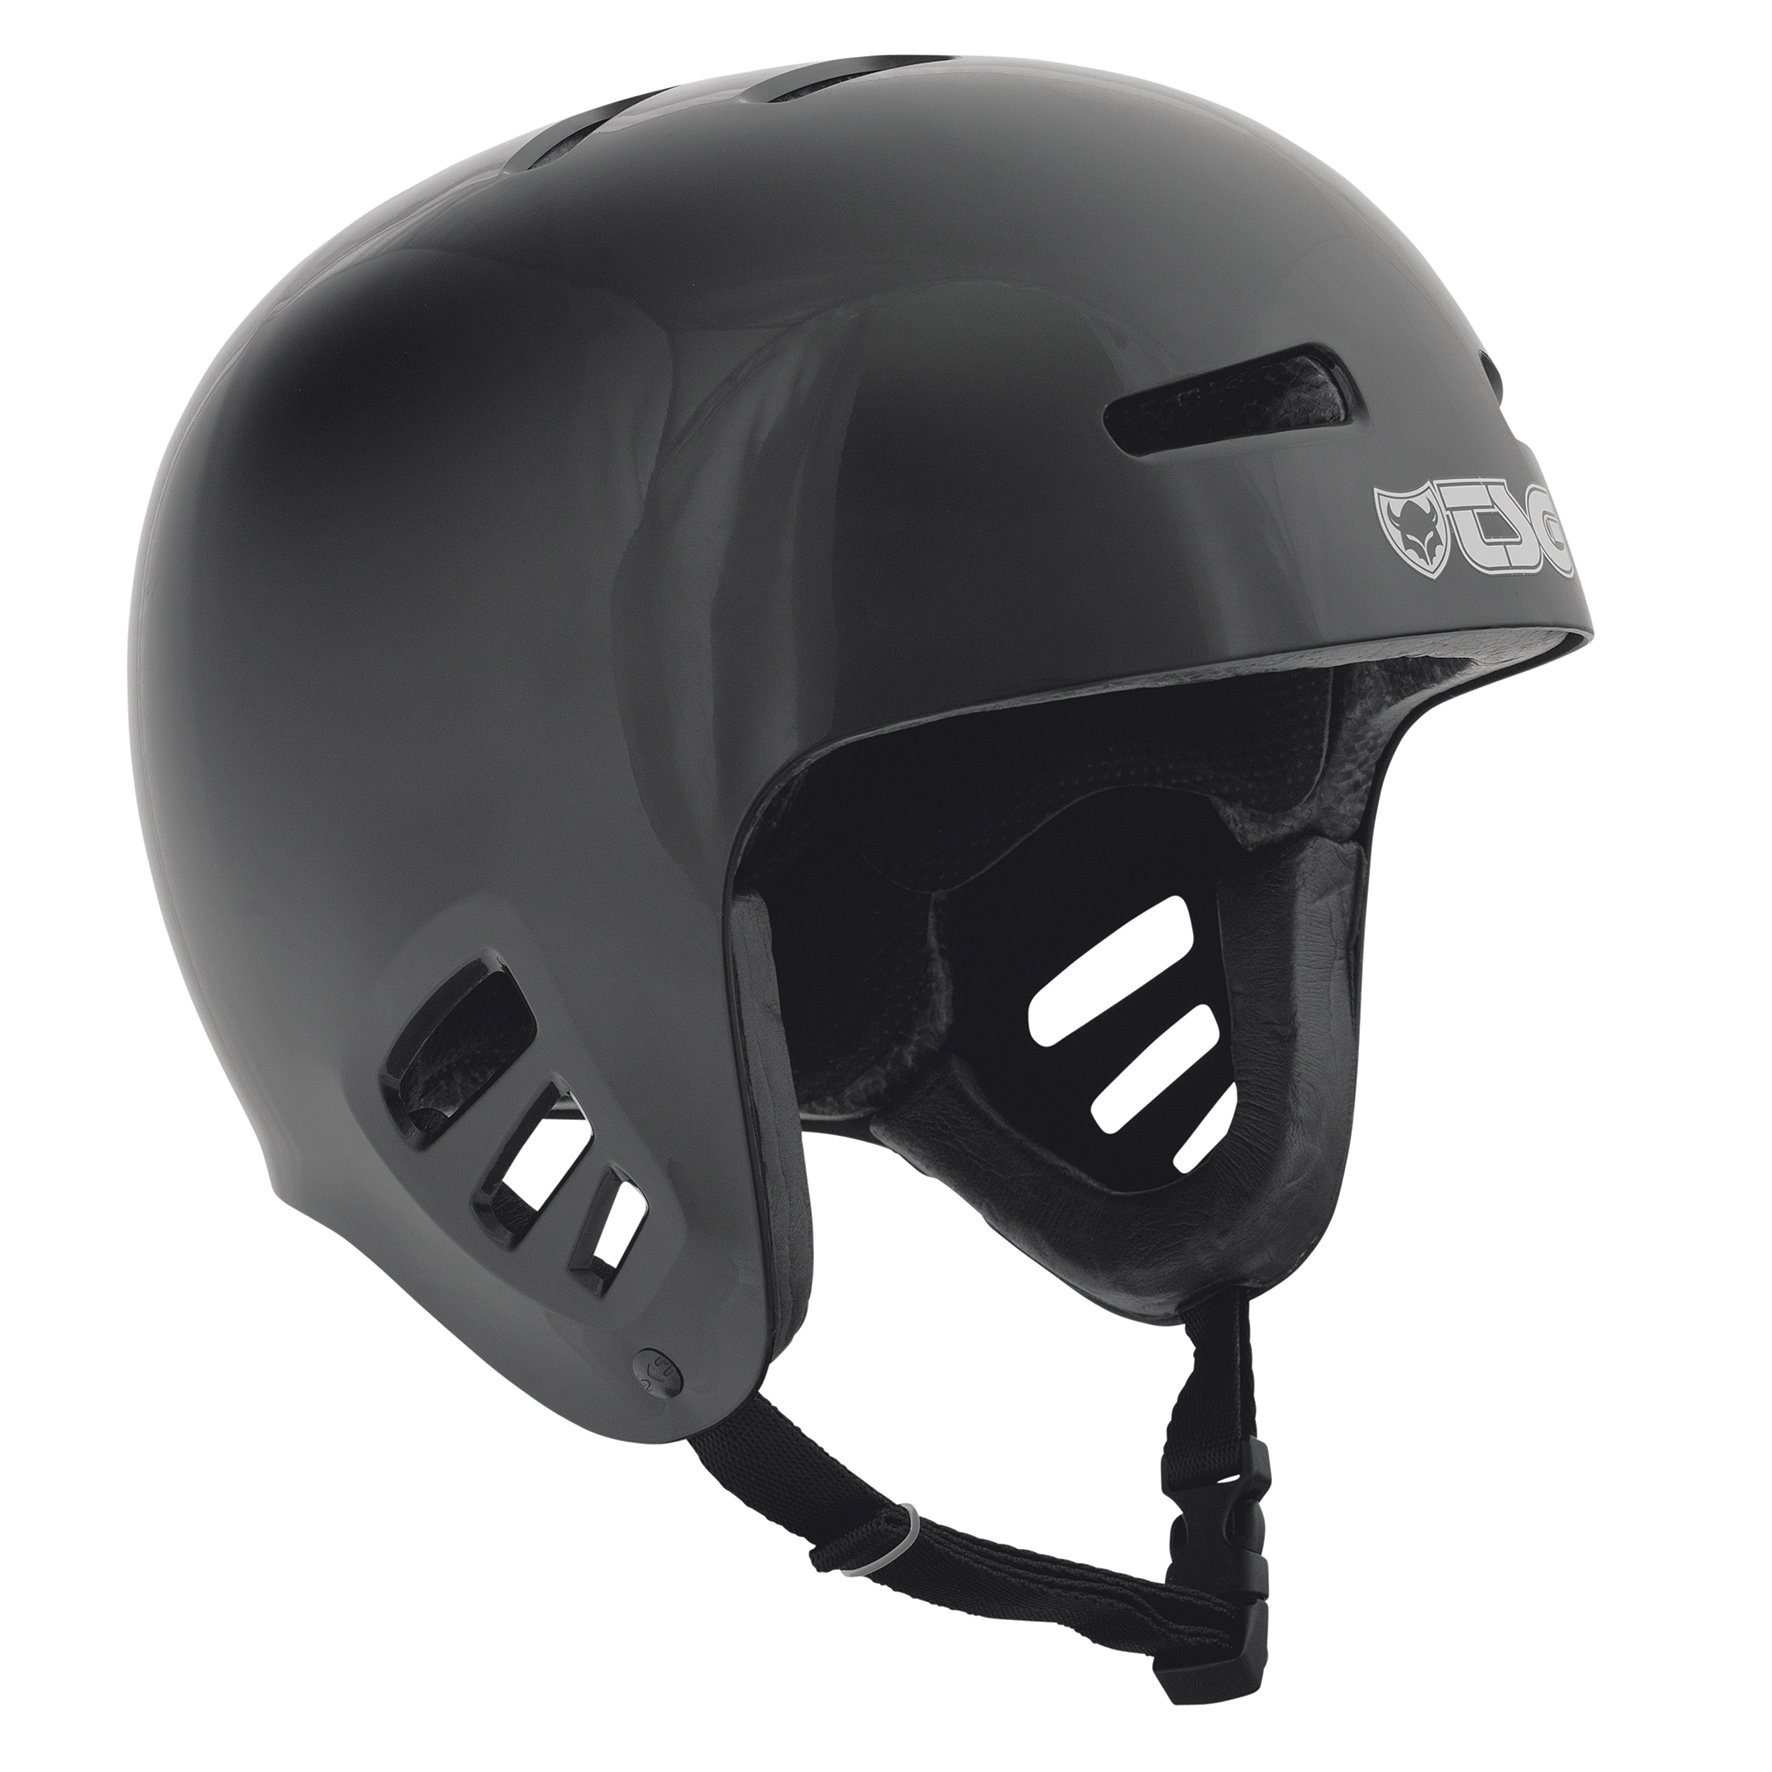 TSG Fahrradhelm Dawn Solid Color - black, BMX/MTB Helm